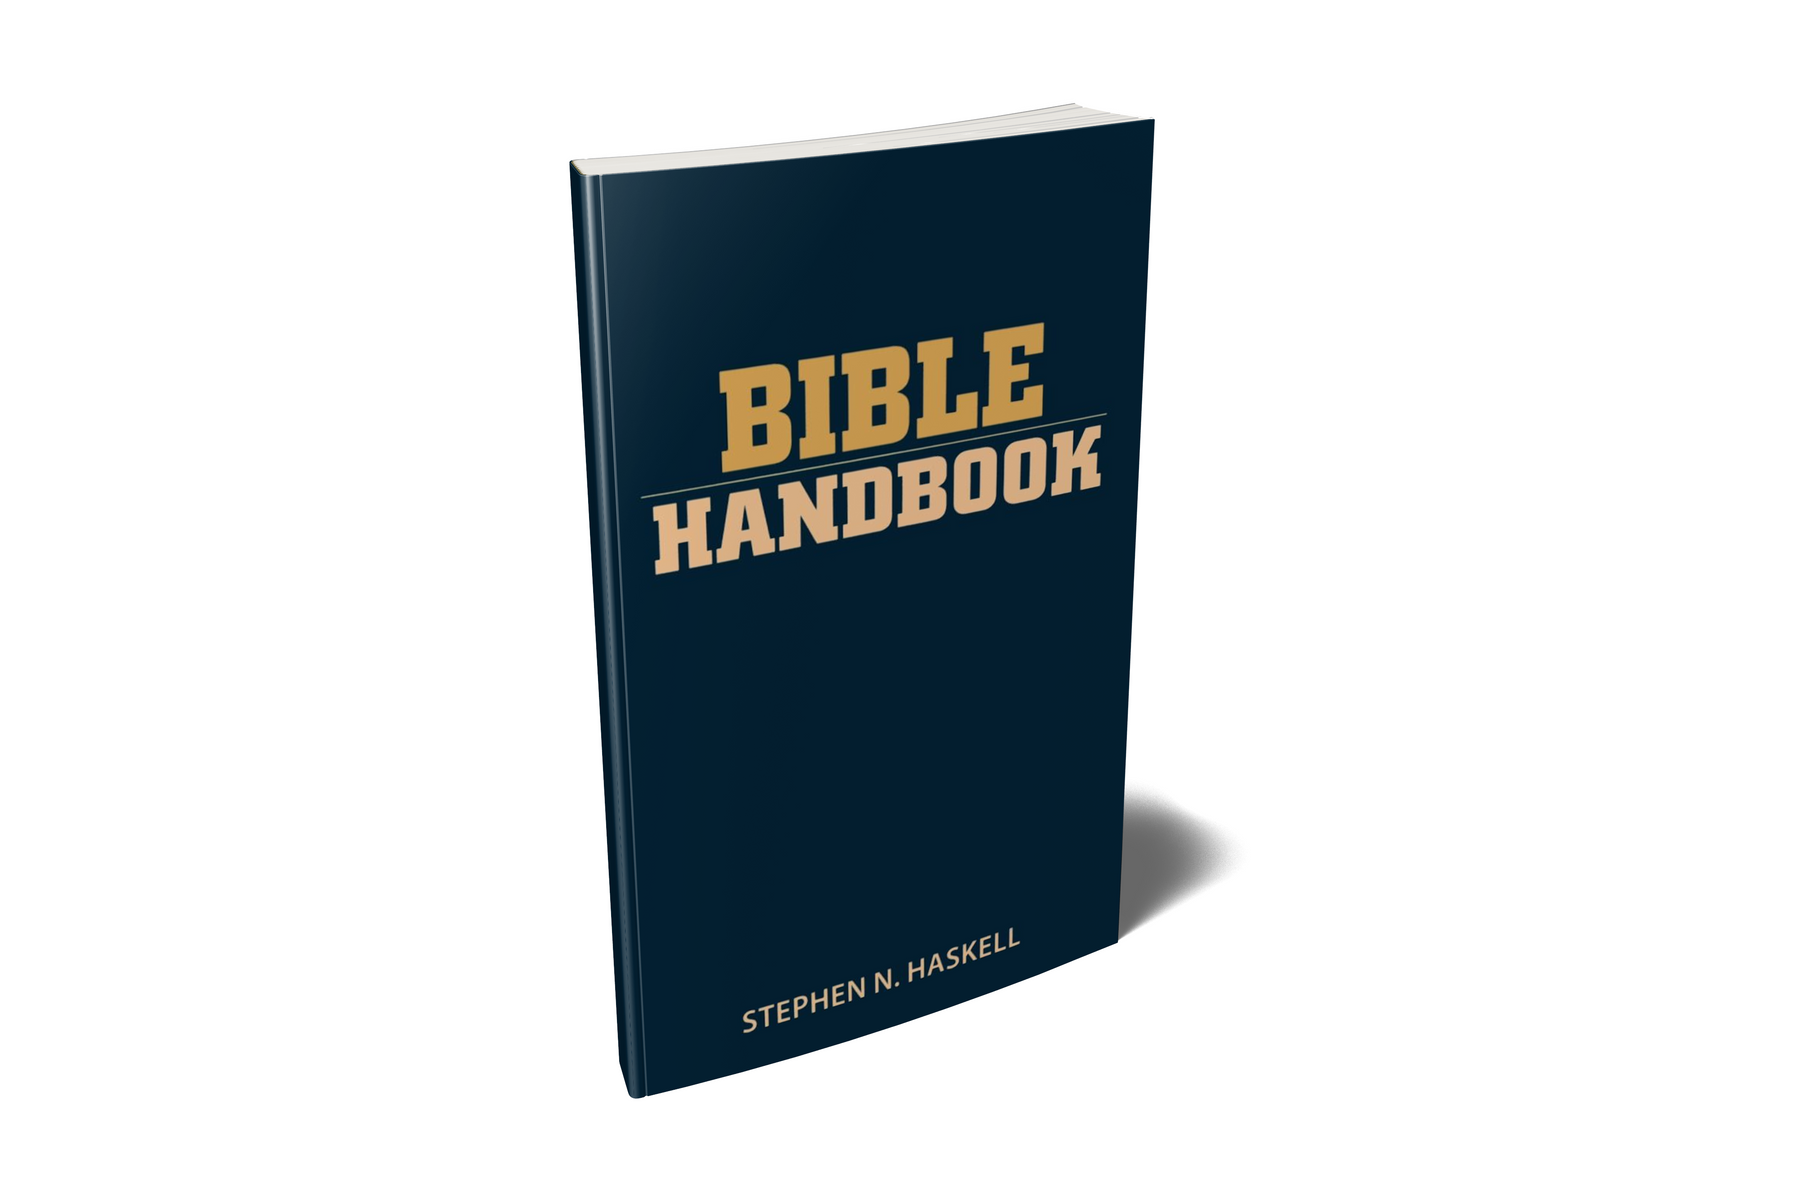 Bible Handbook by Stephen Haskell